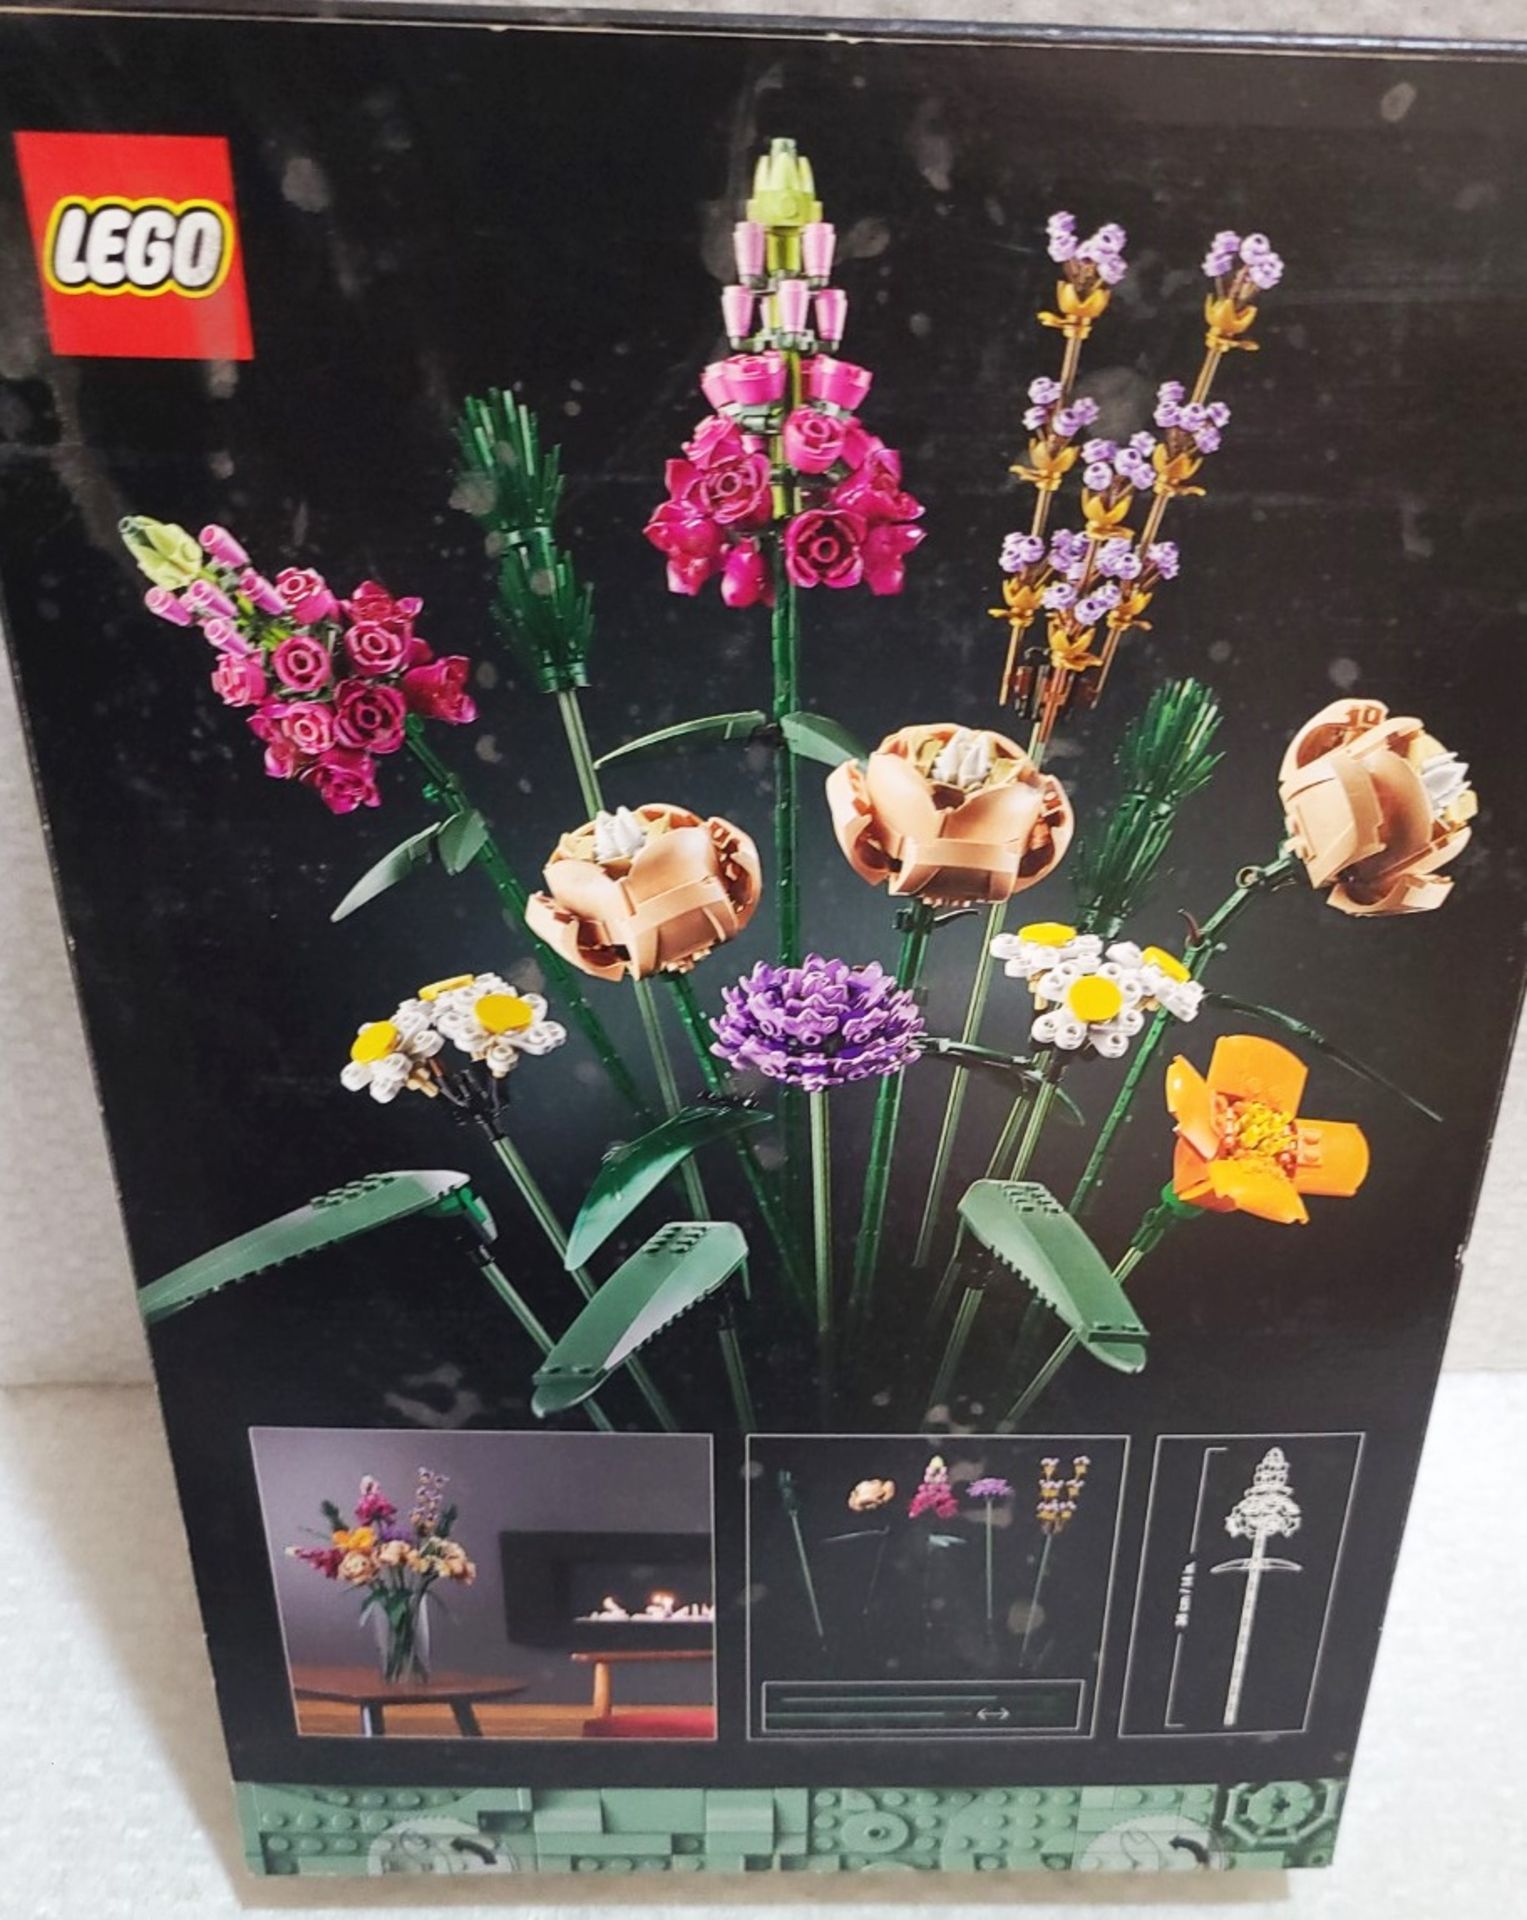 1 x LEGO Creator Expert Flower Bouquet Set 10280 - Original Price £54.95 - Unused Boxed Stock - Ref: - Image 3 of 4